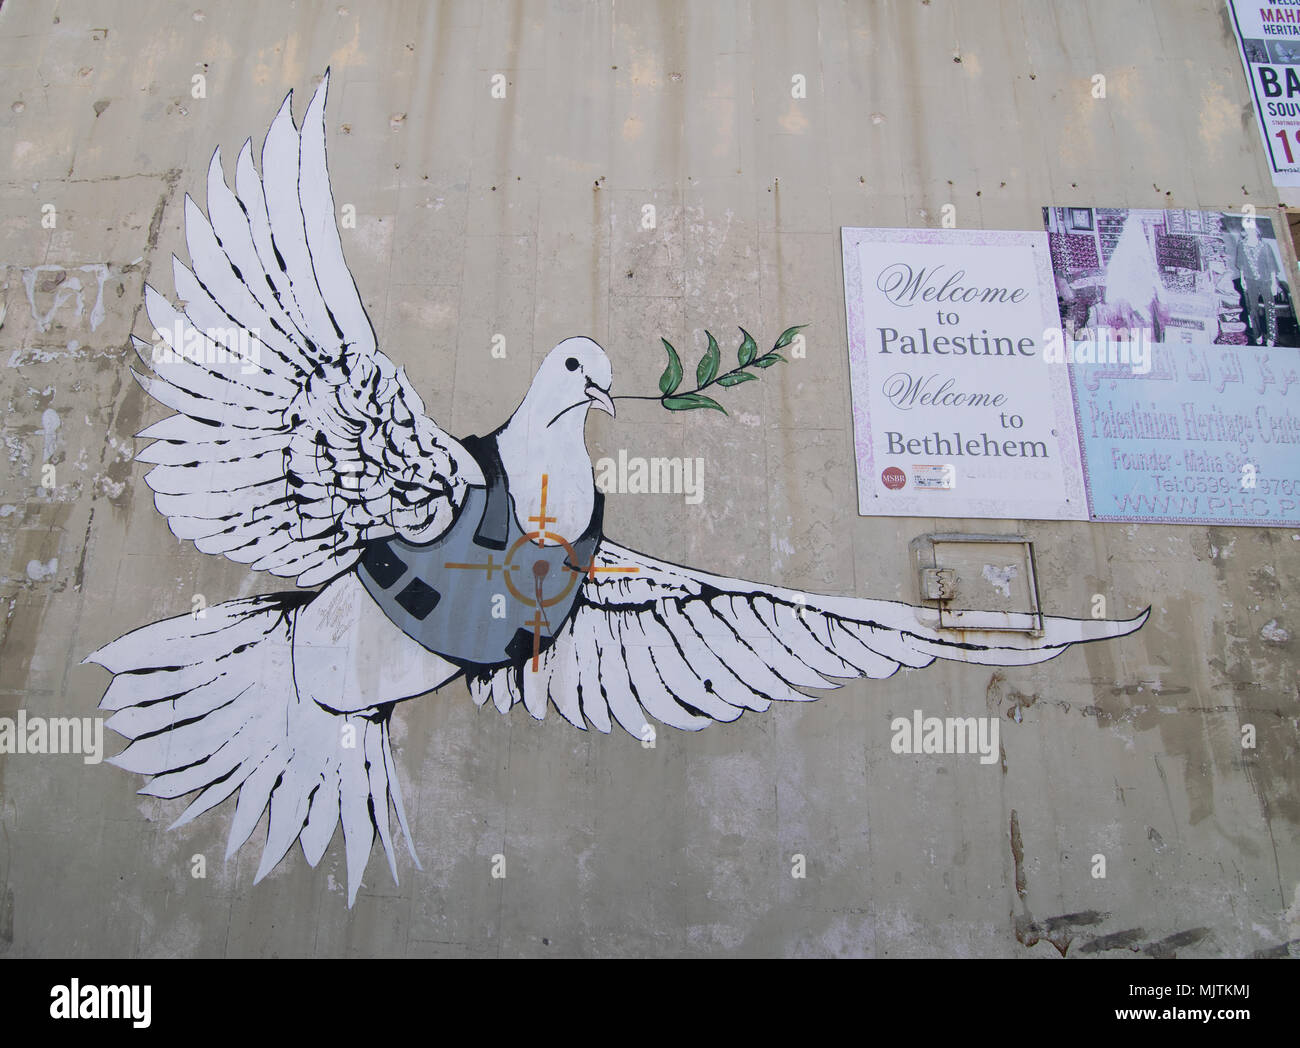 Armored dove dall'artista di strada Banksy a Betlehem Foto Stock